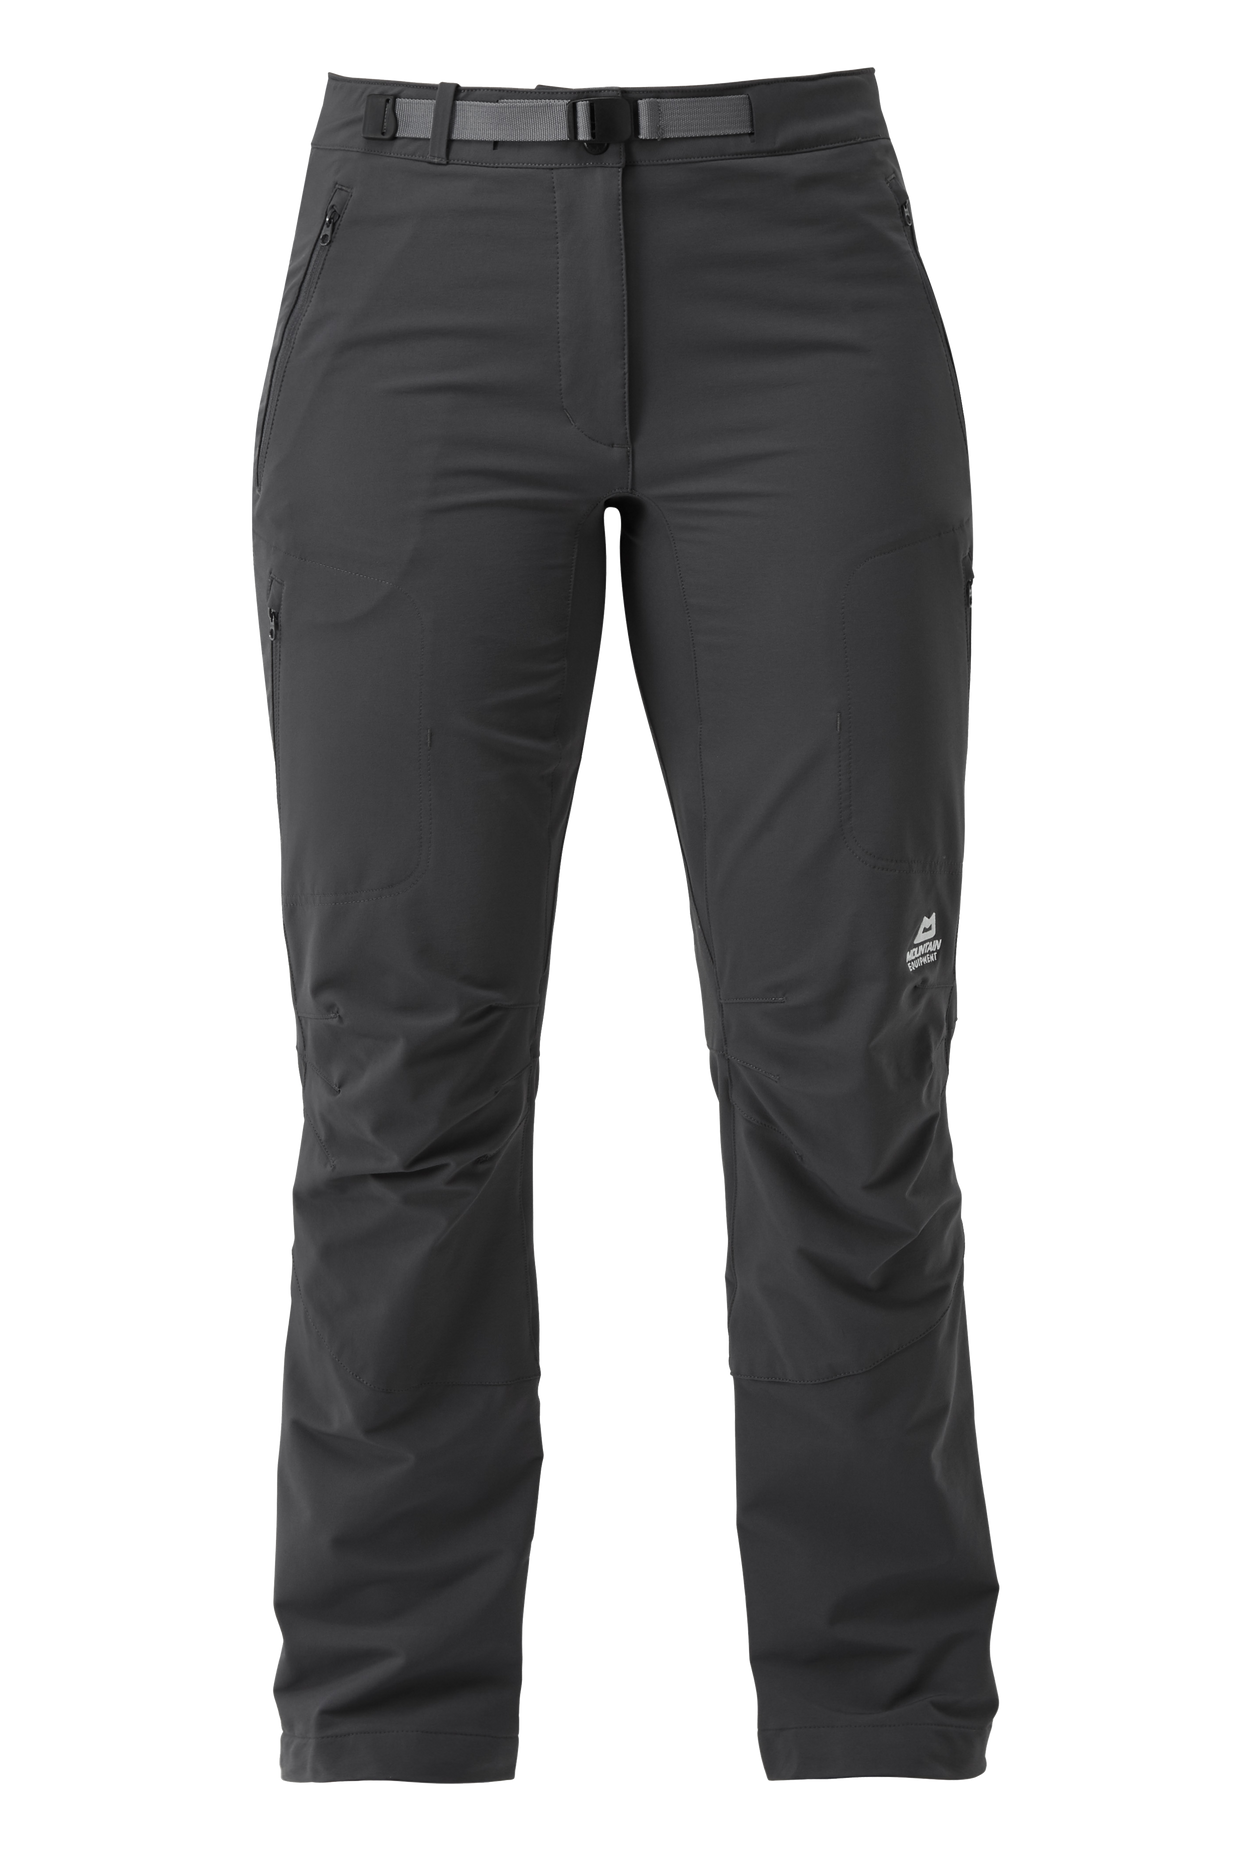 Mountain Equipment dámské softshellové kalhoty Chamois Wmns Pant Barva: Anvil Grey, Velikost: 12/M